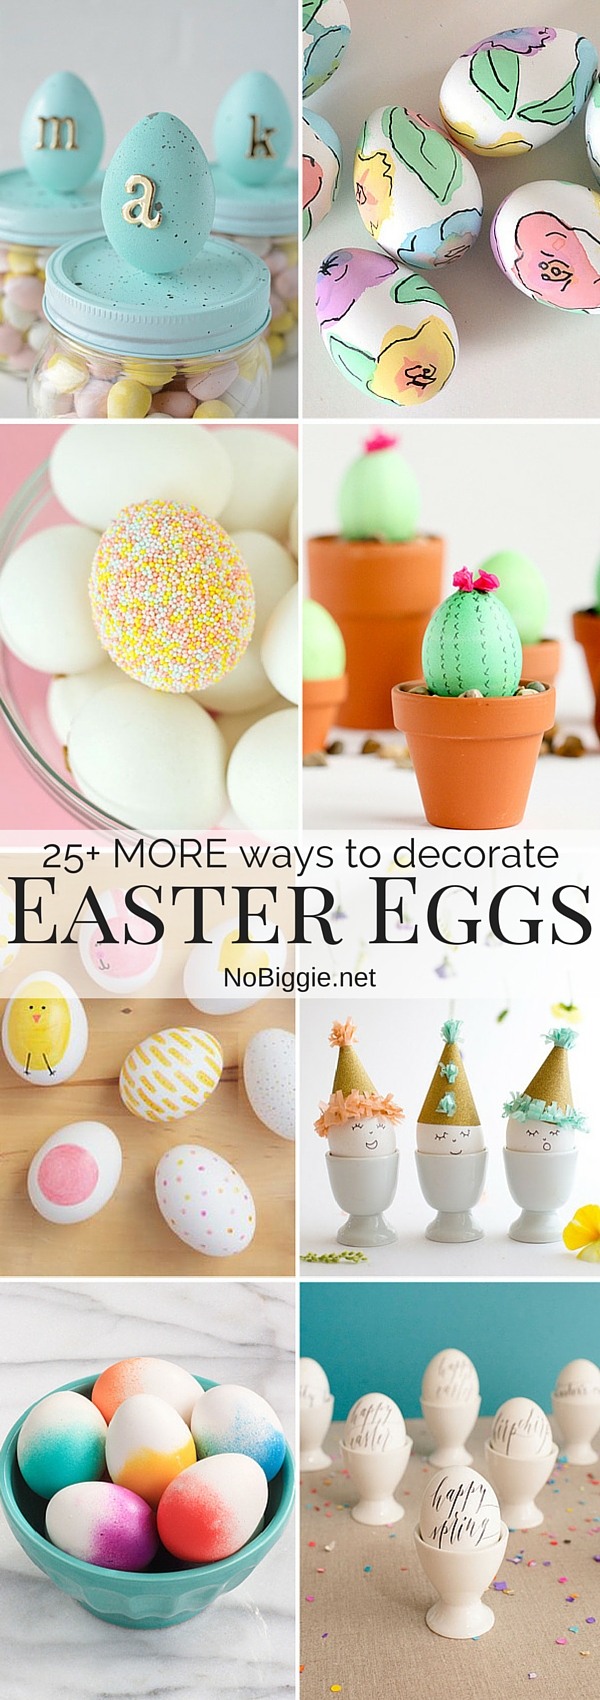 http://www.nobiggie.net/wp-content/uploads/2016/03/25-MORE-ways-to-decorate-Easter-Eggs-NoBiggie.net-lng.jpg